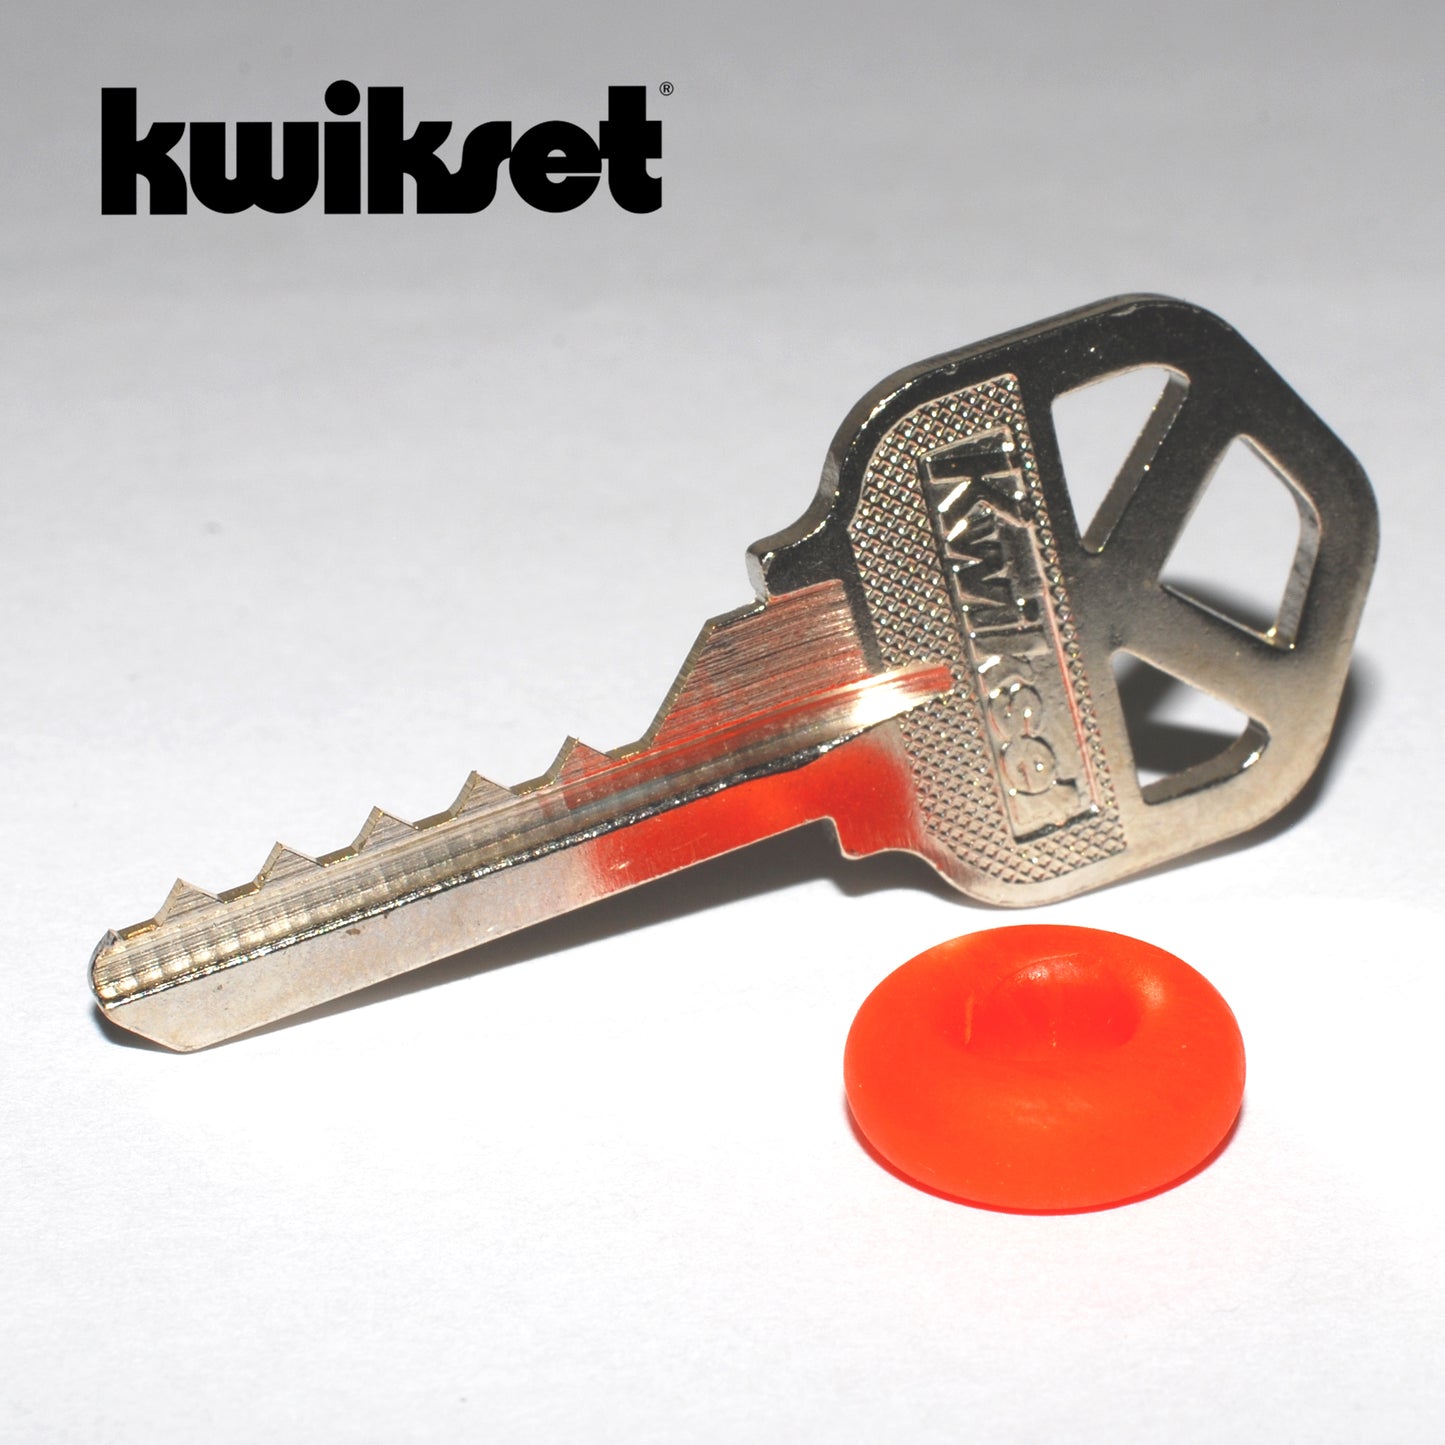 Kwikset Original 1176, KW1 Bump Key with Latex Ring